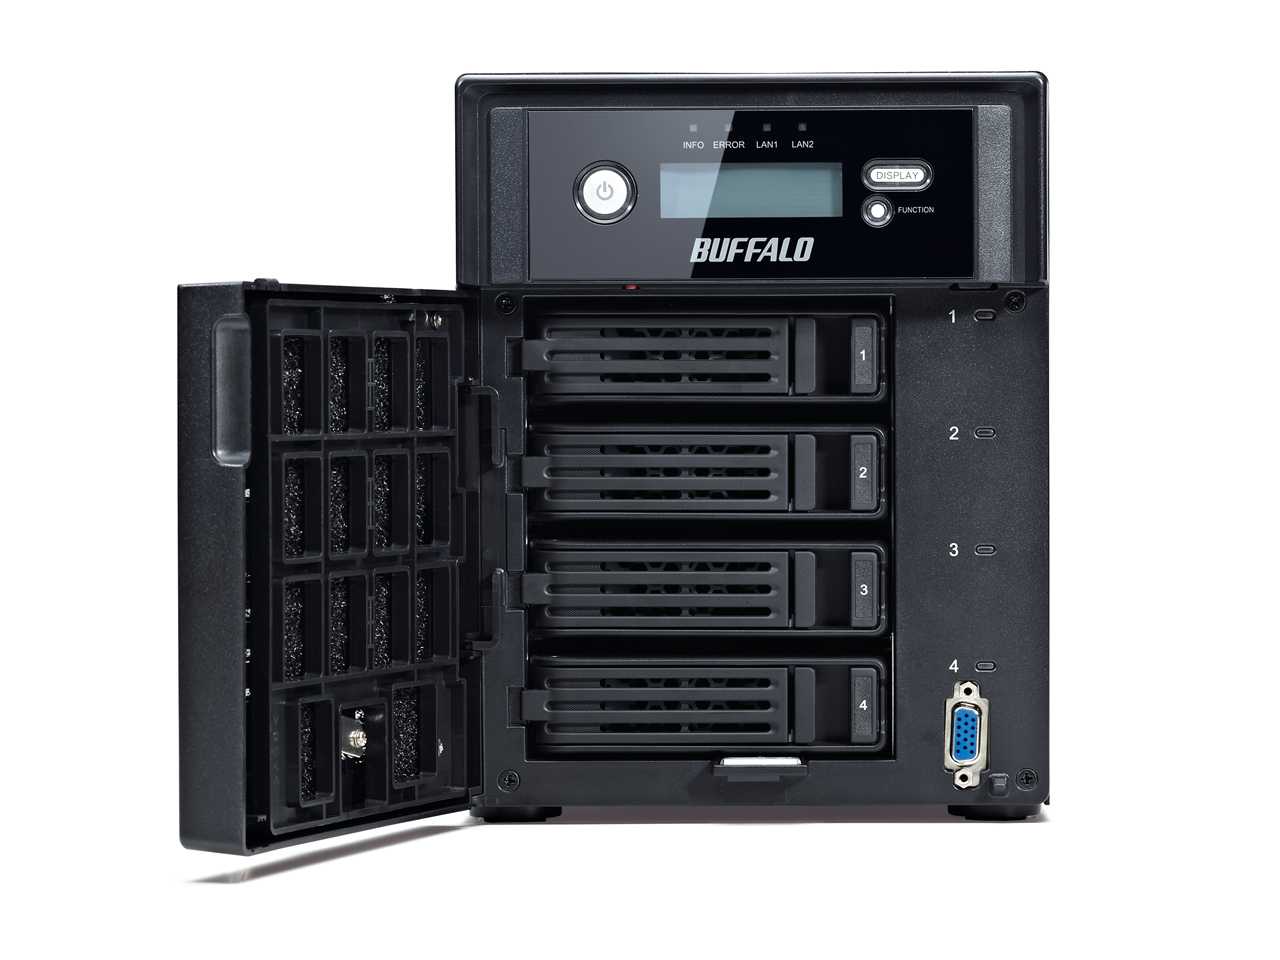 Buffalo TeraStation™ WSS 5000 4 Bay with Windows® Storage Server forbusiness - business_nas tswss | GLOBAL